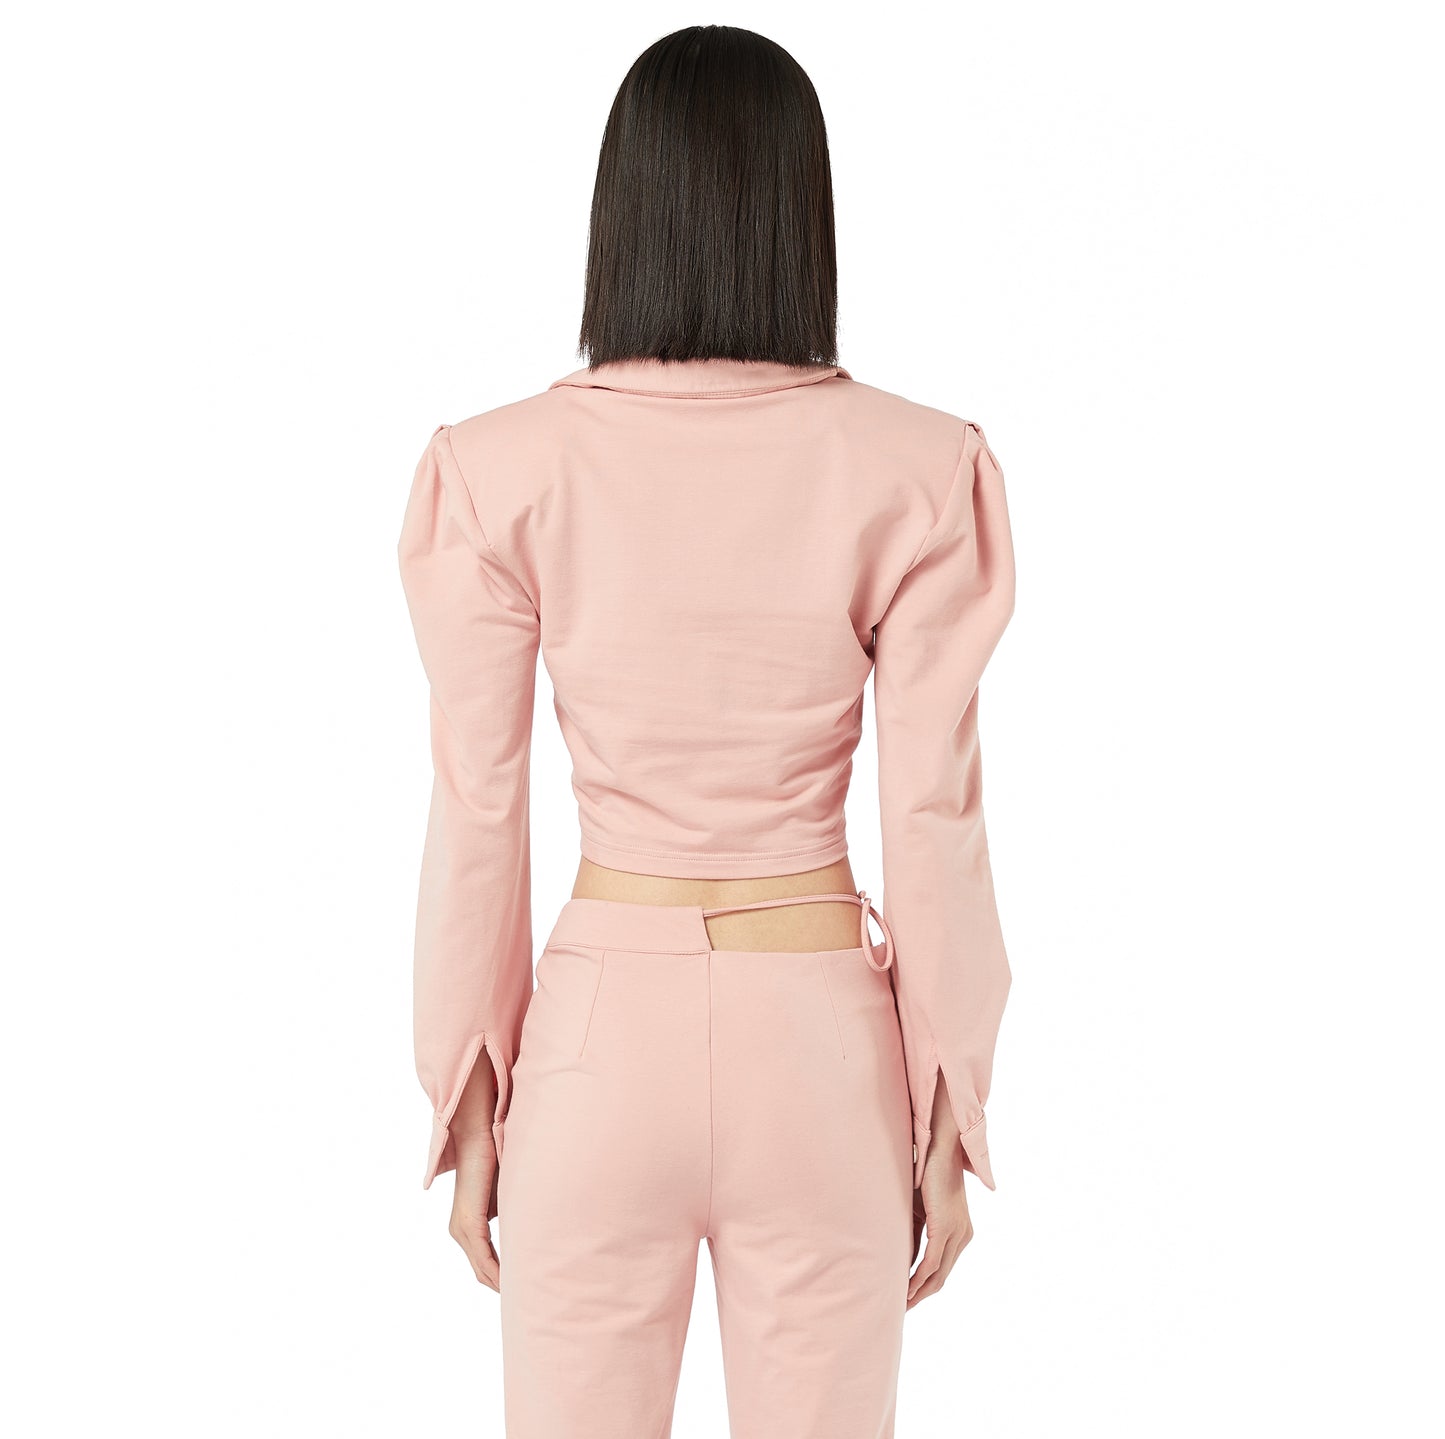 Kiki Polo Long Sleeves Top in Pink